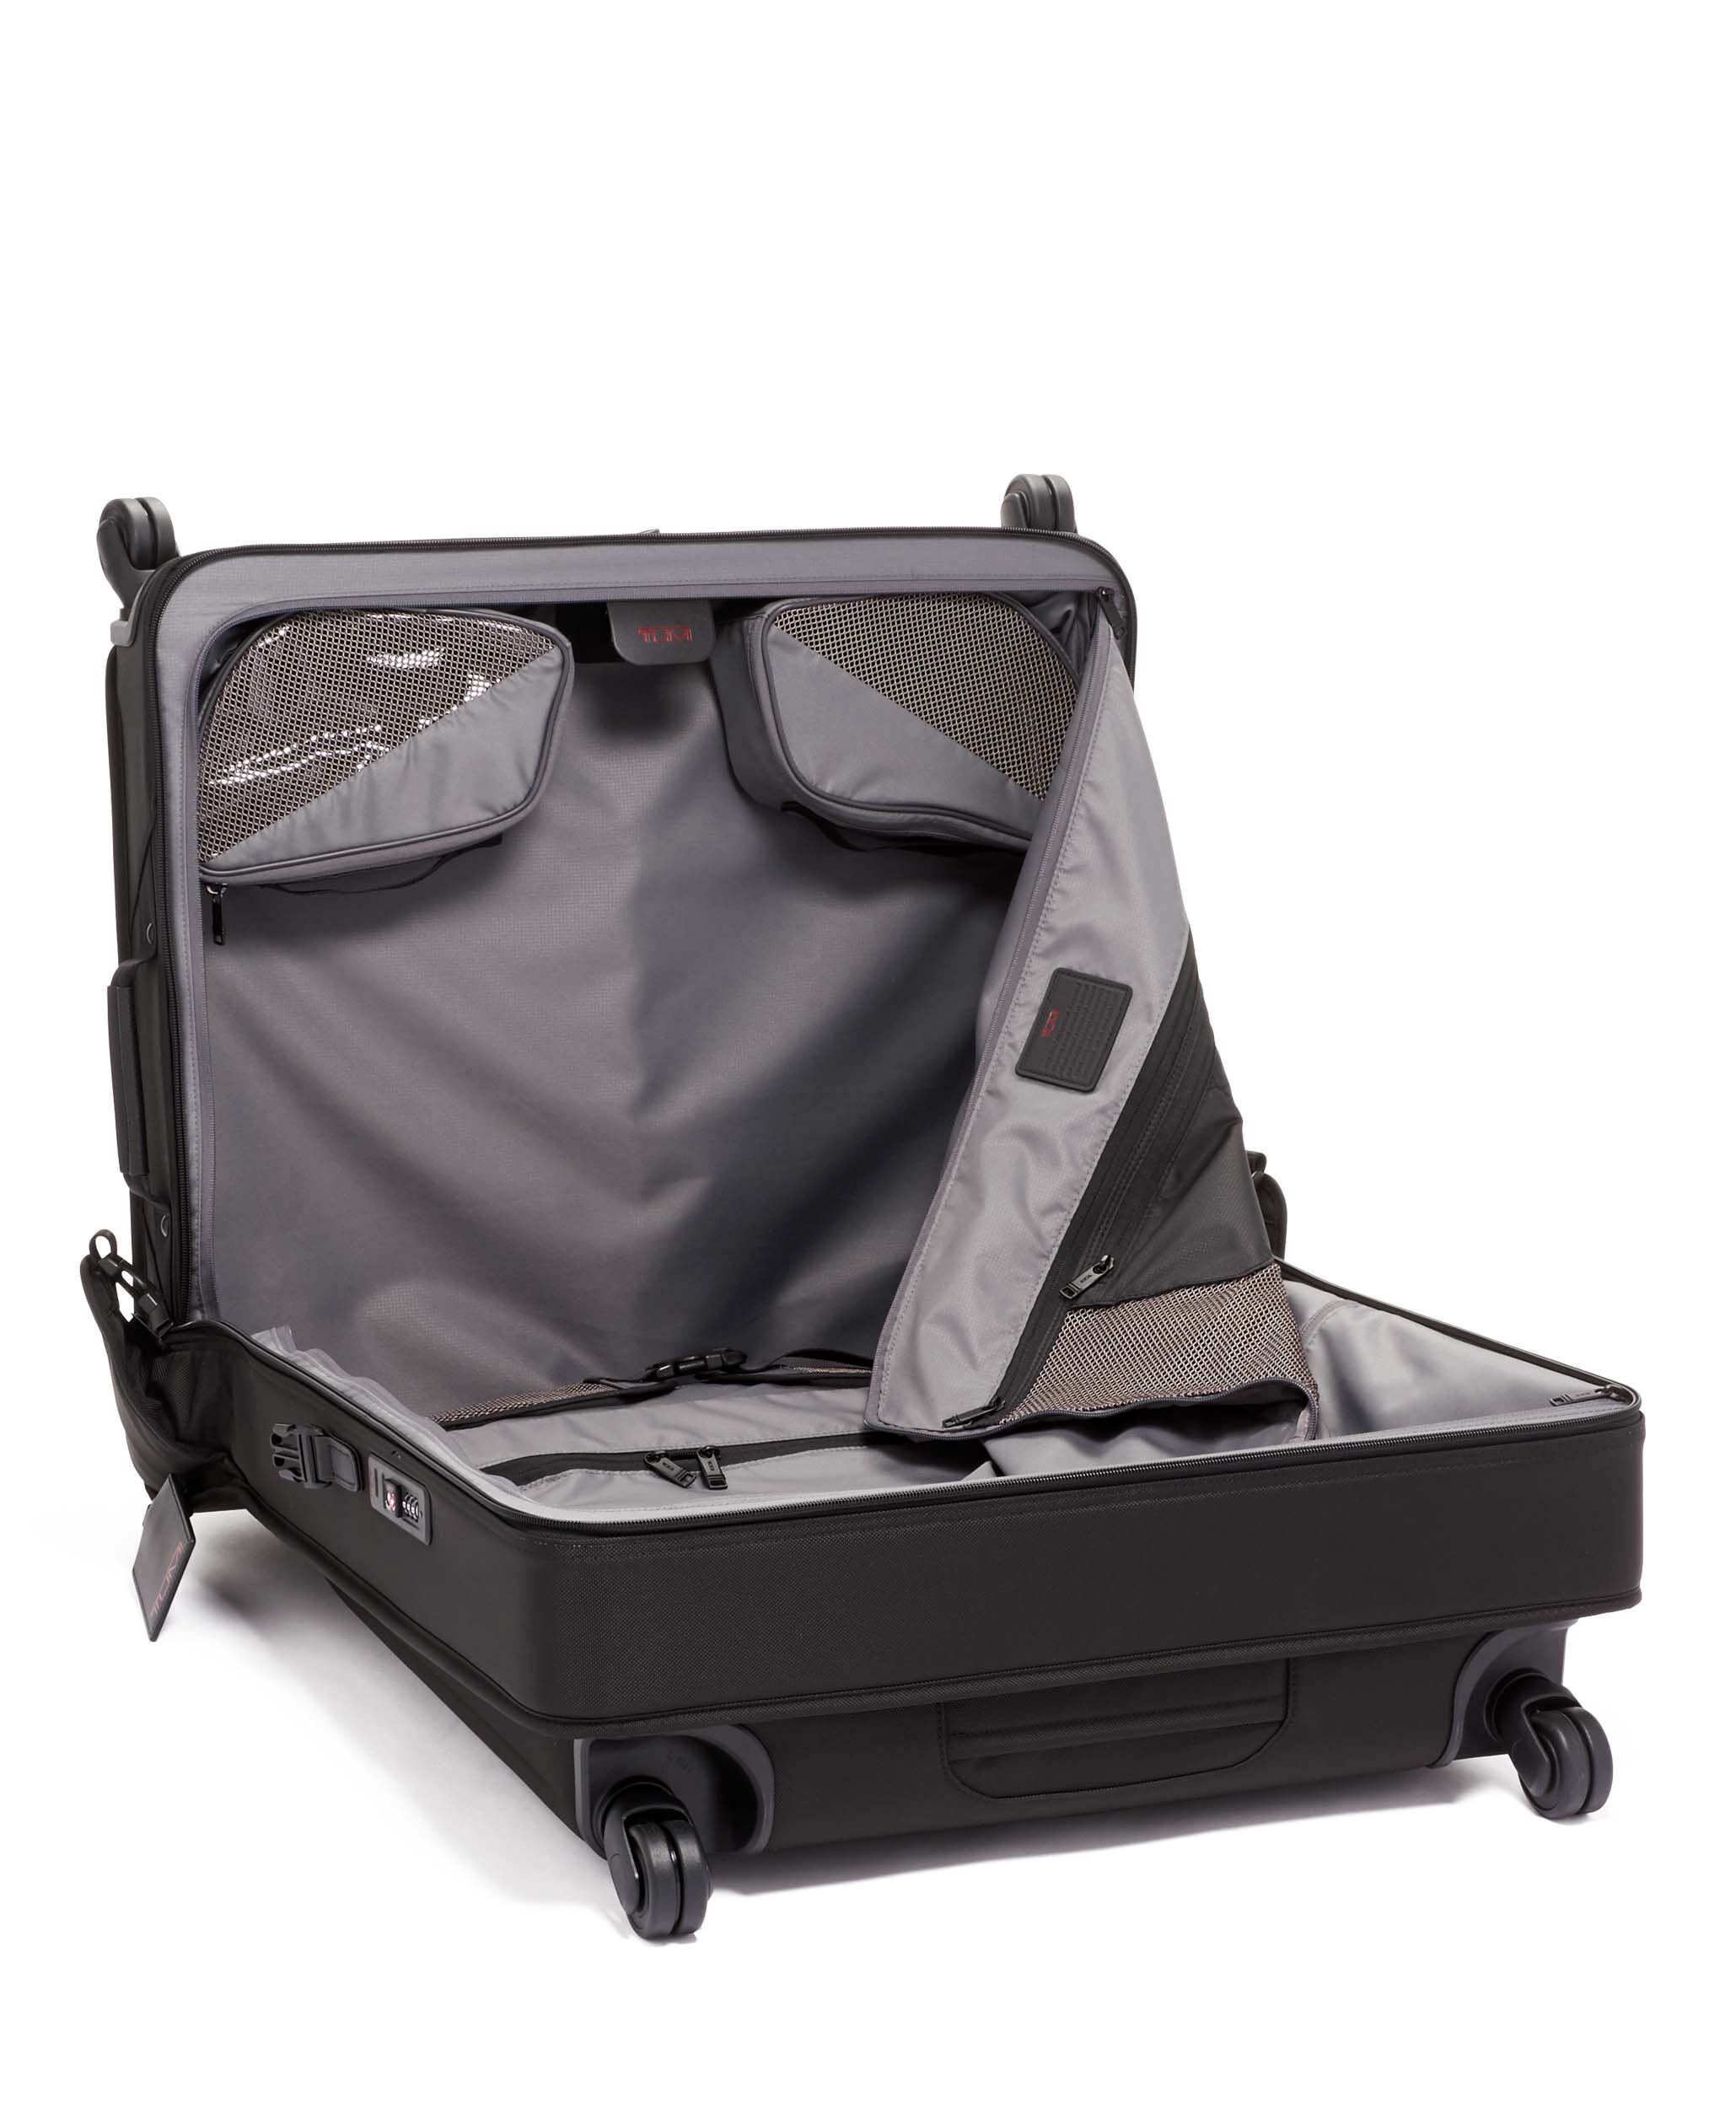 Tumi Luggage - Ducati - Cary On Luggage Suitcase - 22 in | eBay